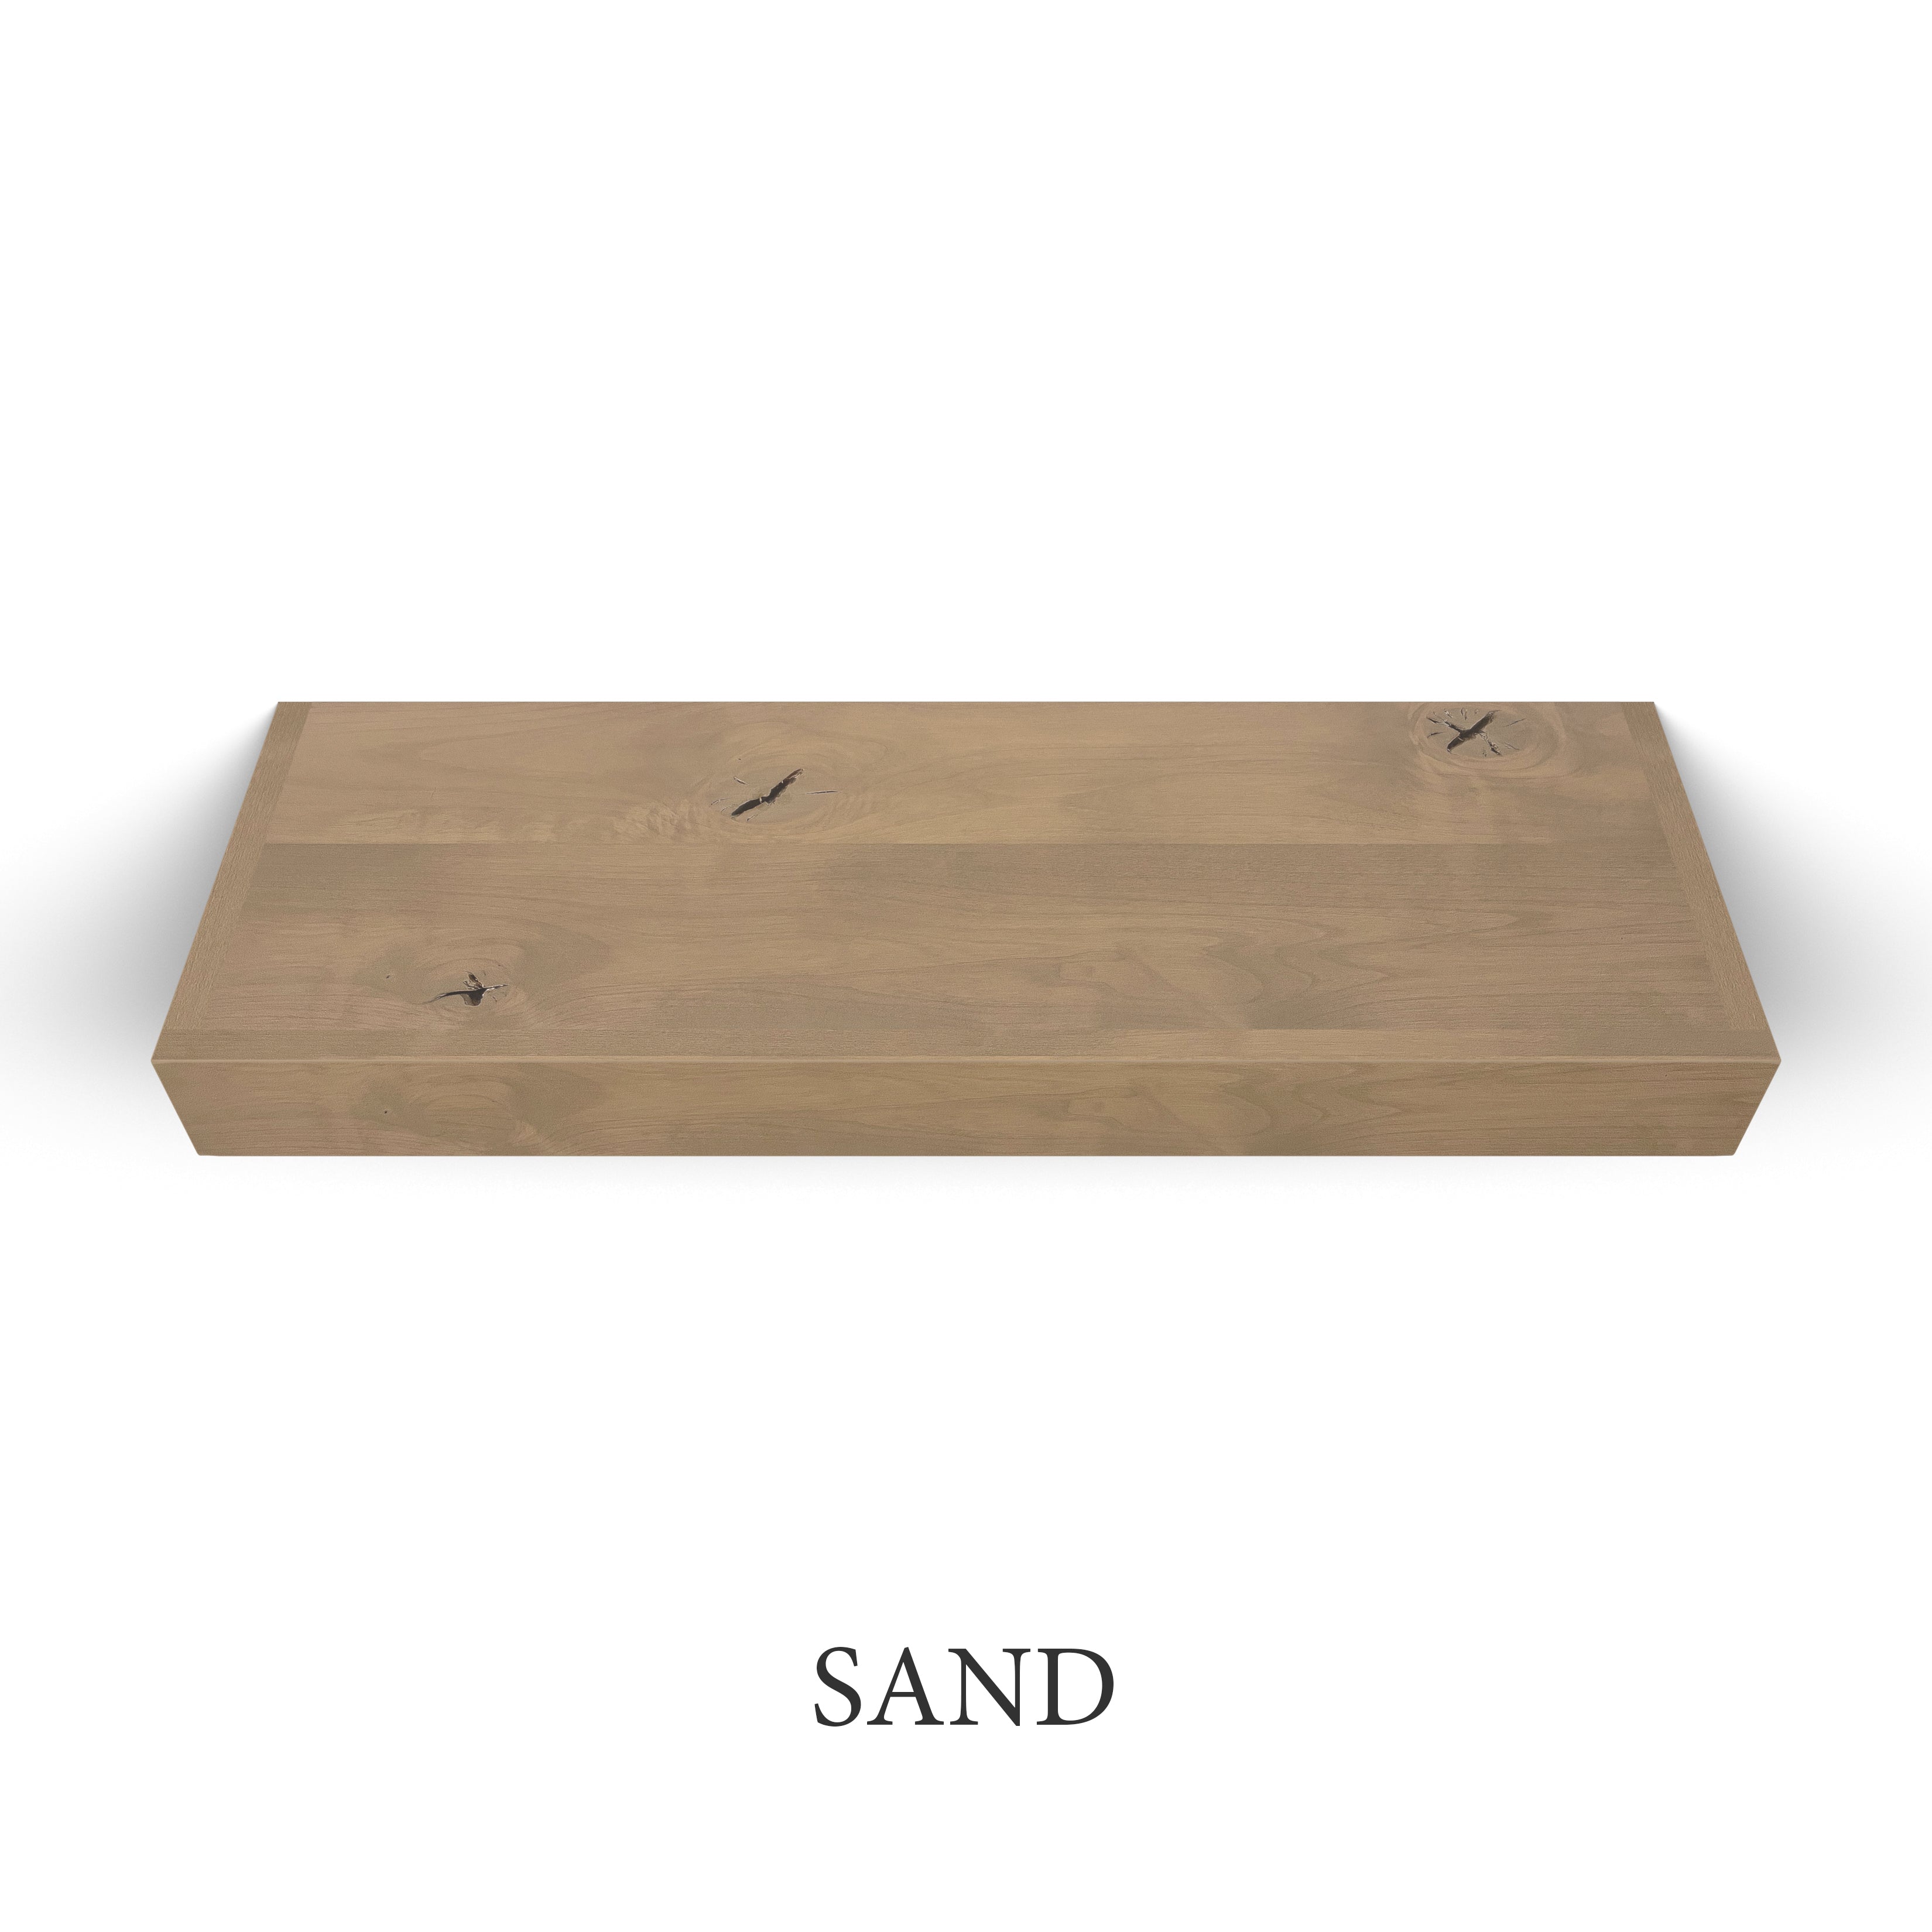 sand Rustic Alder 3 Inch Thick LED Lighted Floating Shelf - Battery